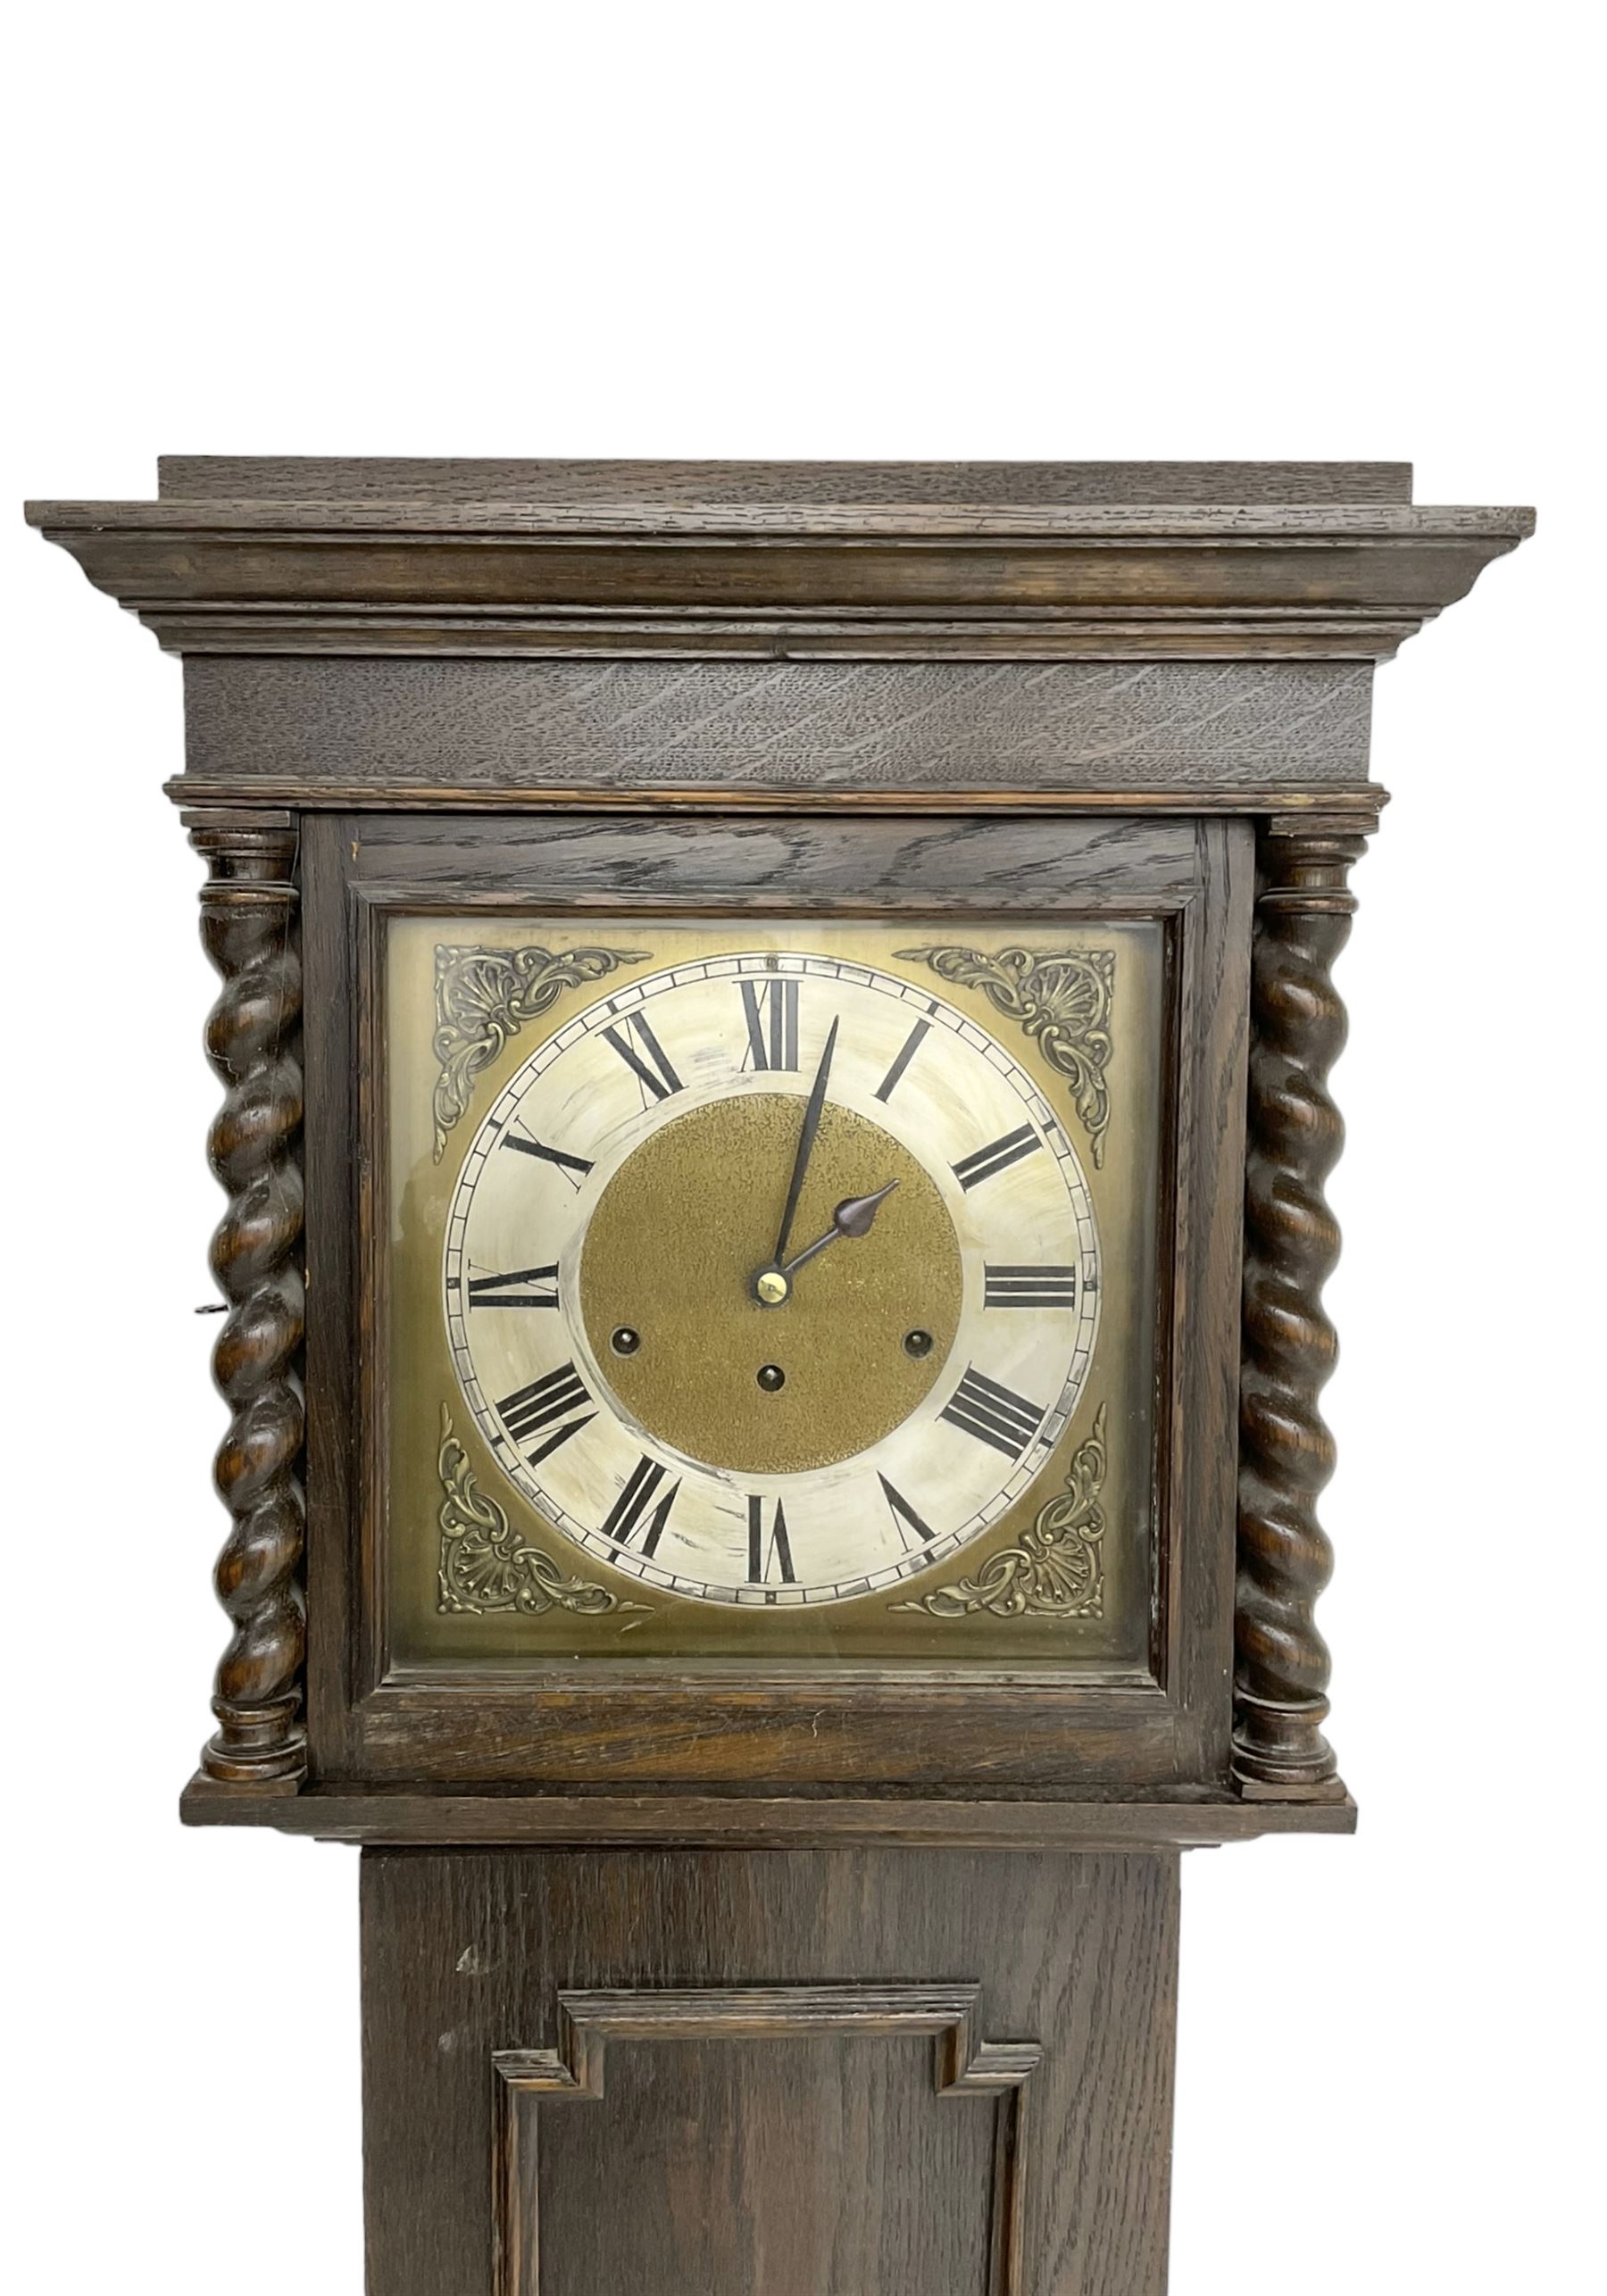 Early 20th century German oak cased 8-day longcase clock - Image 4 of 6